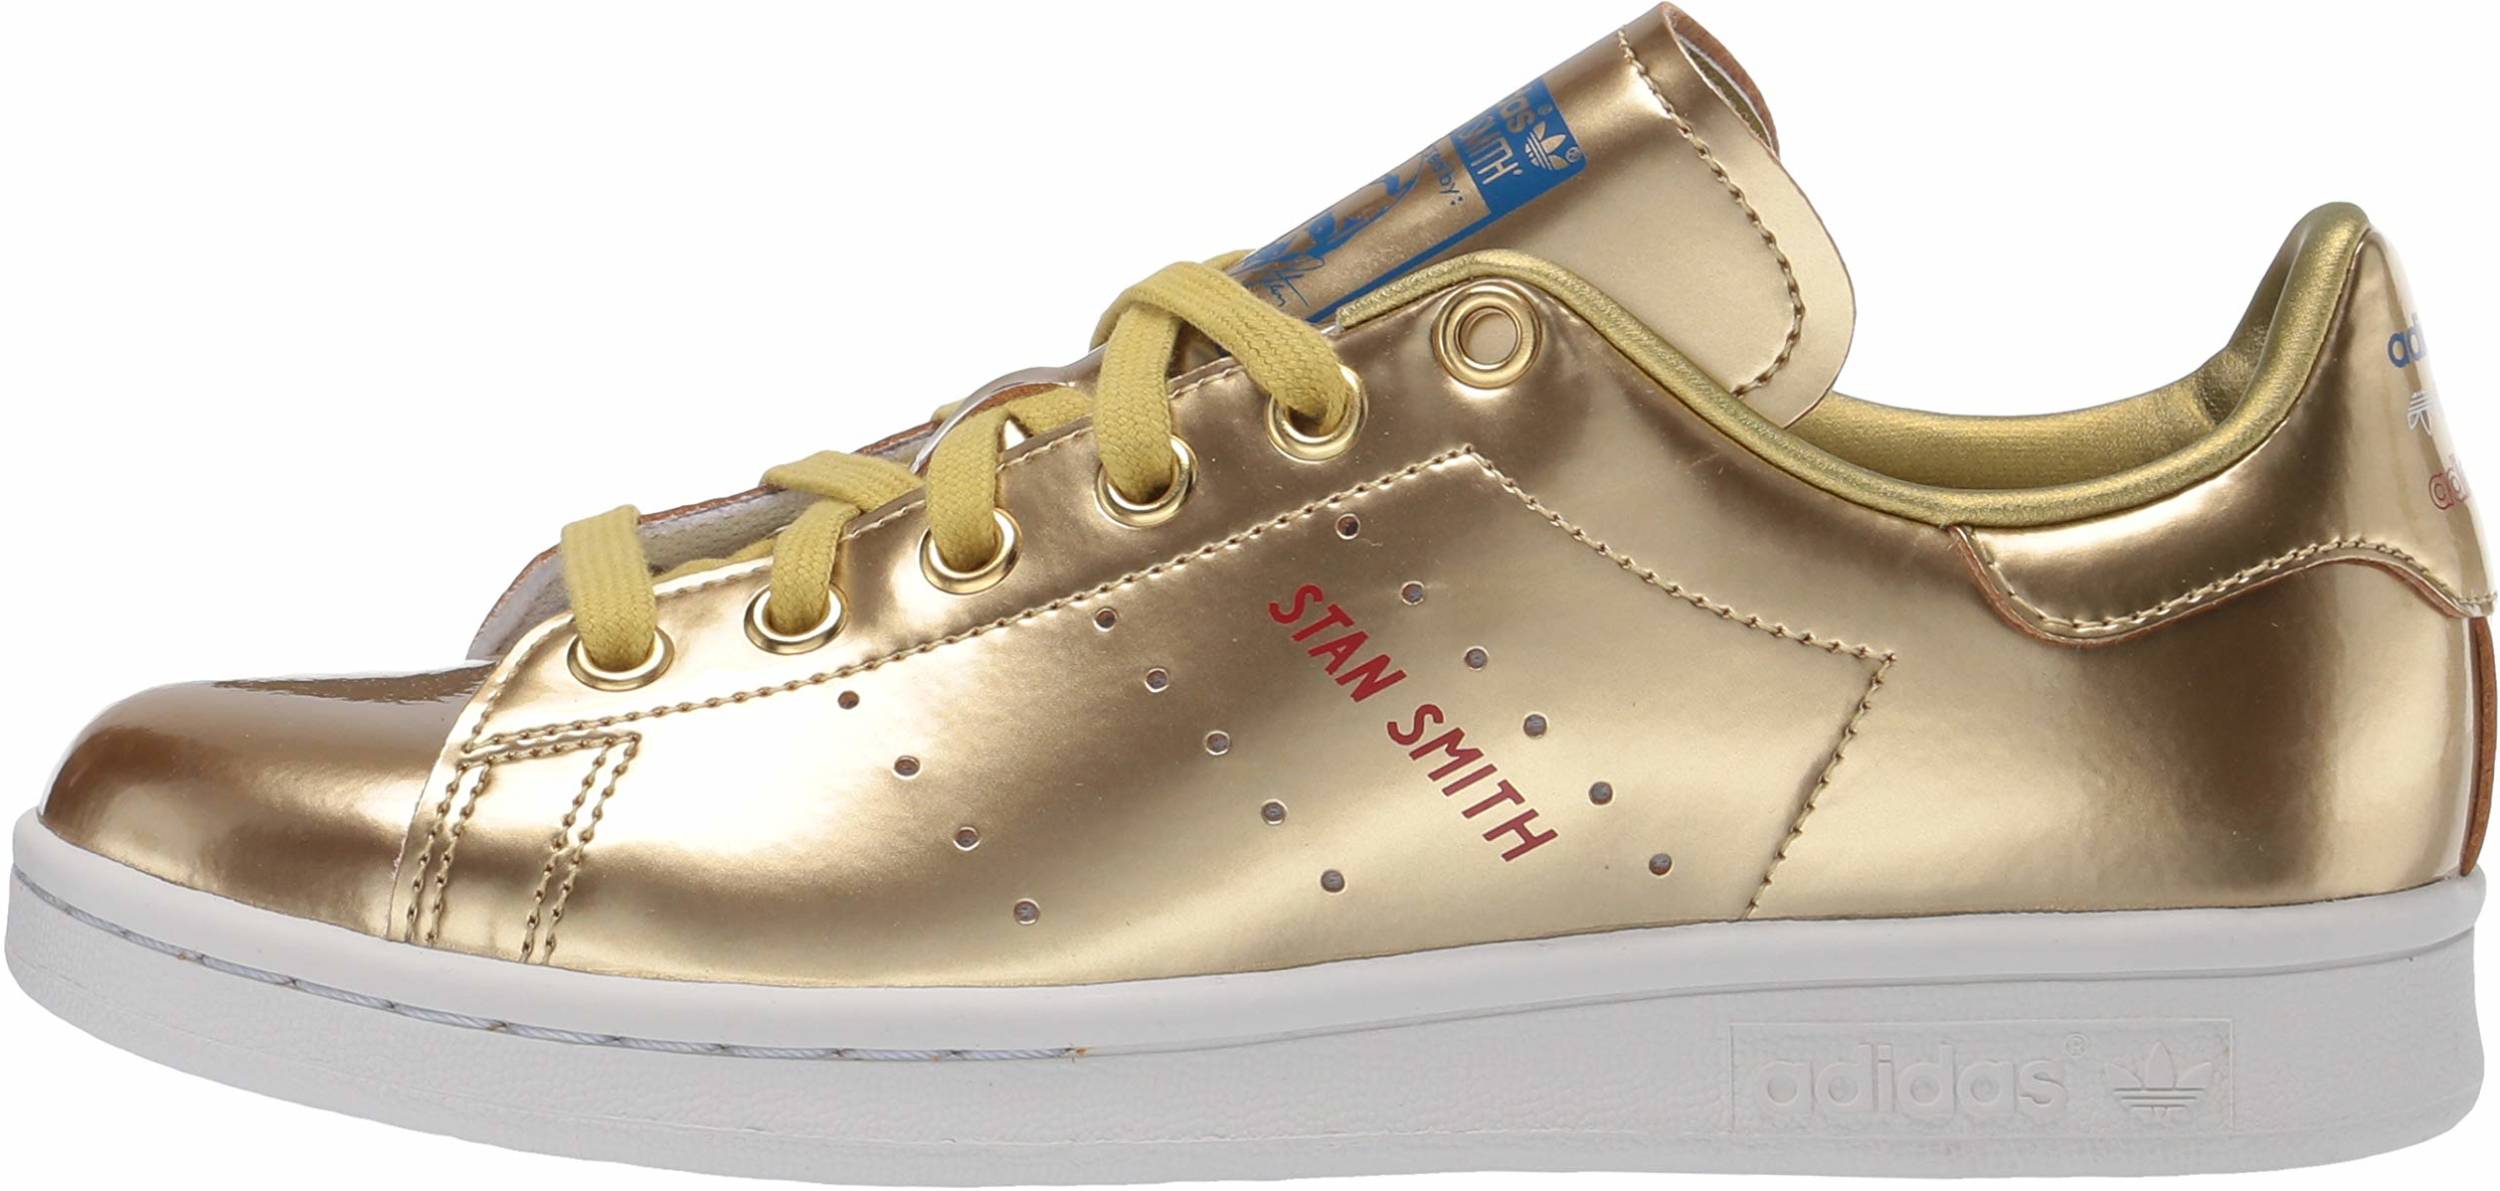 adidas mens gold shoes